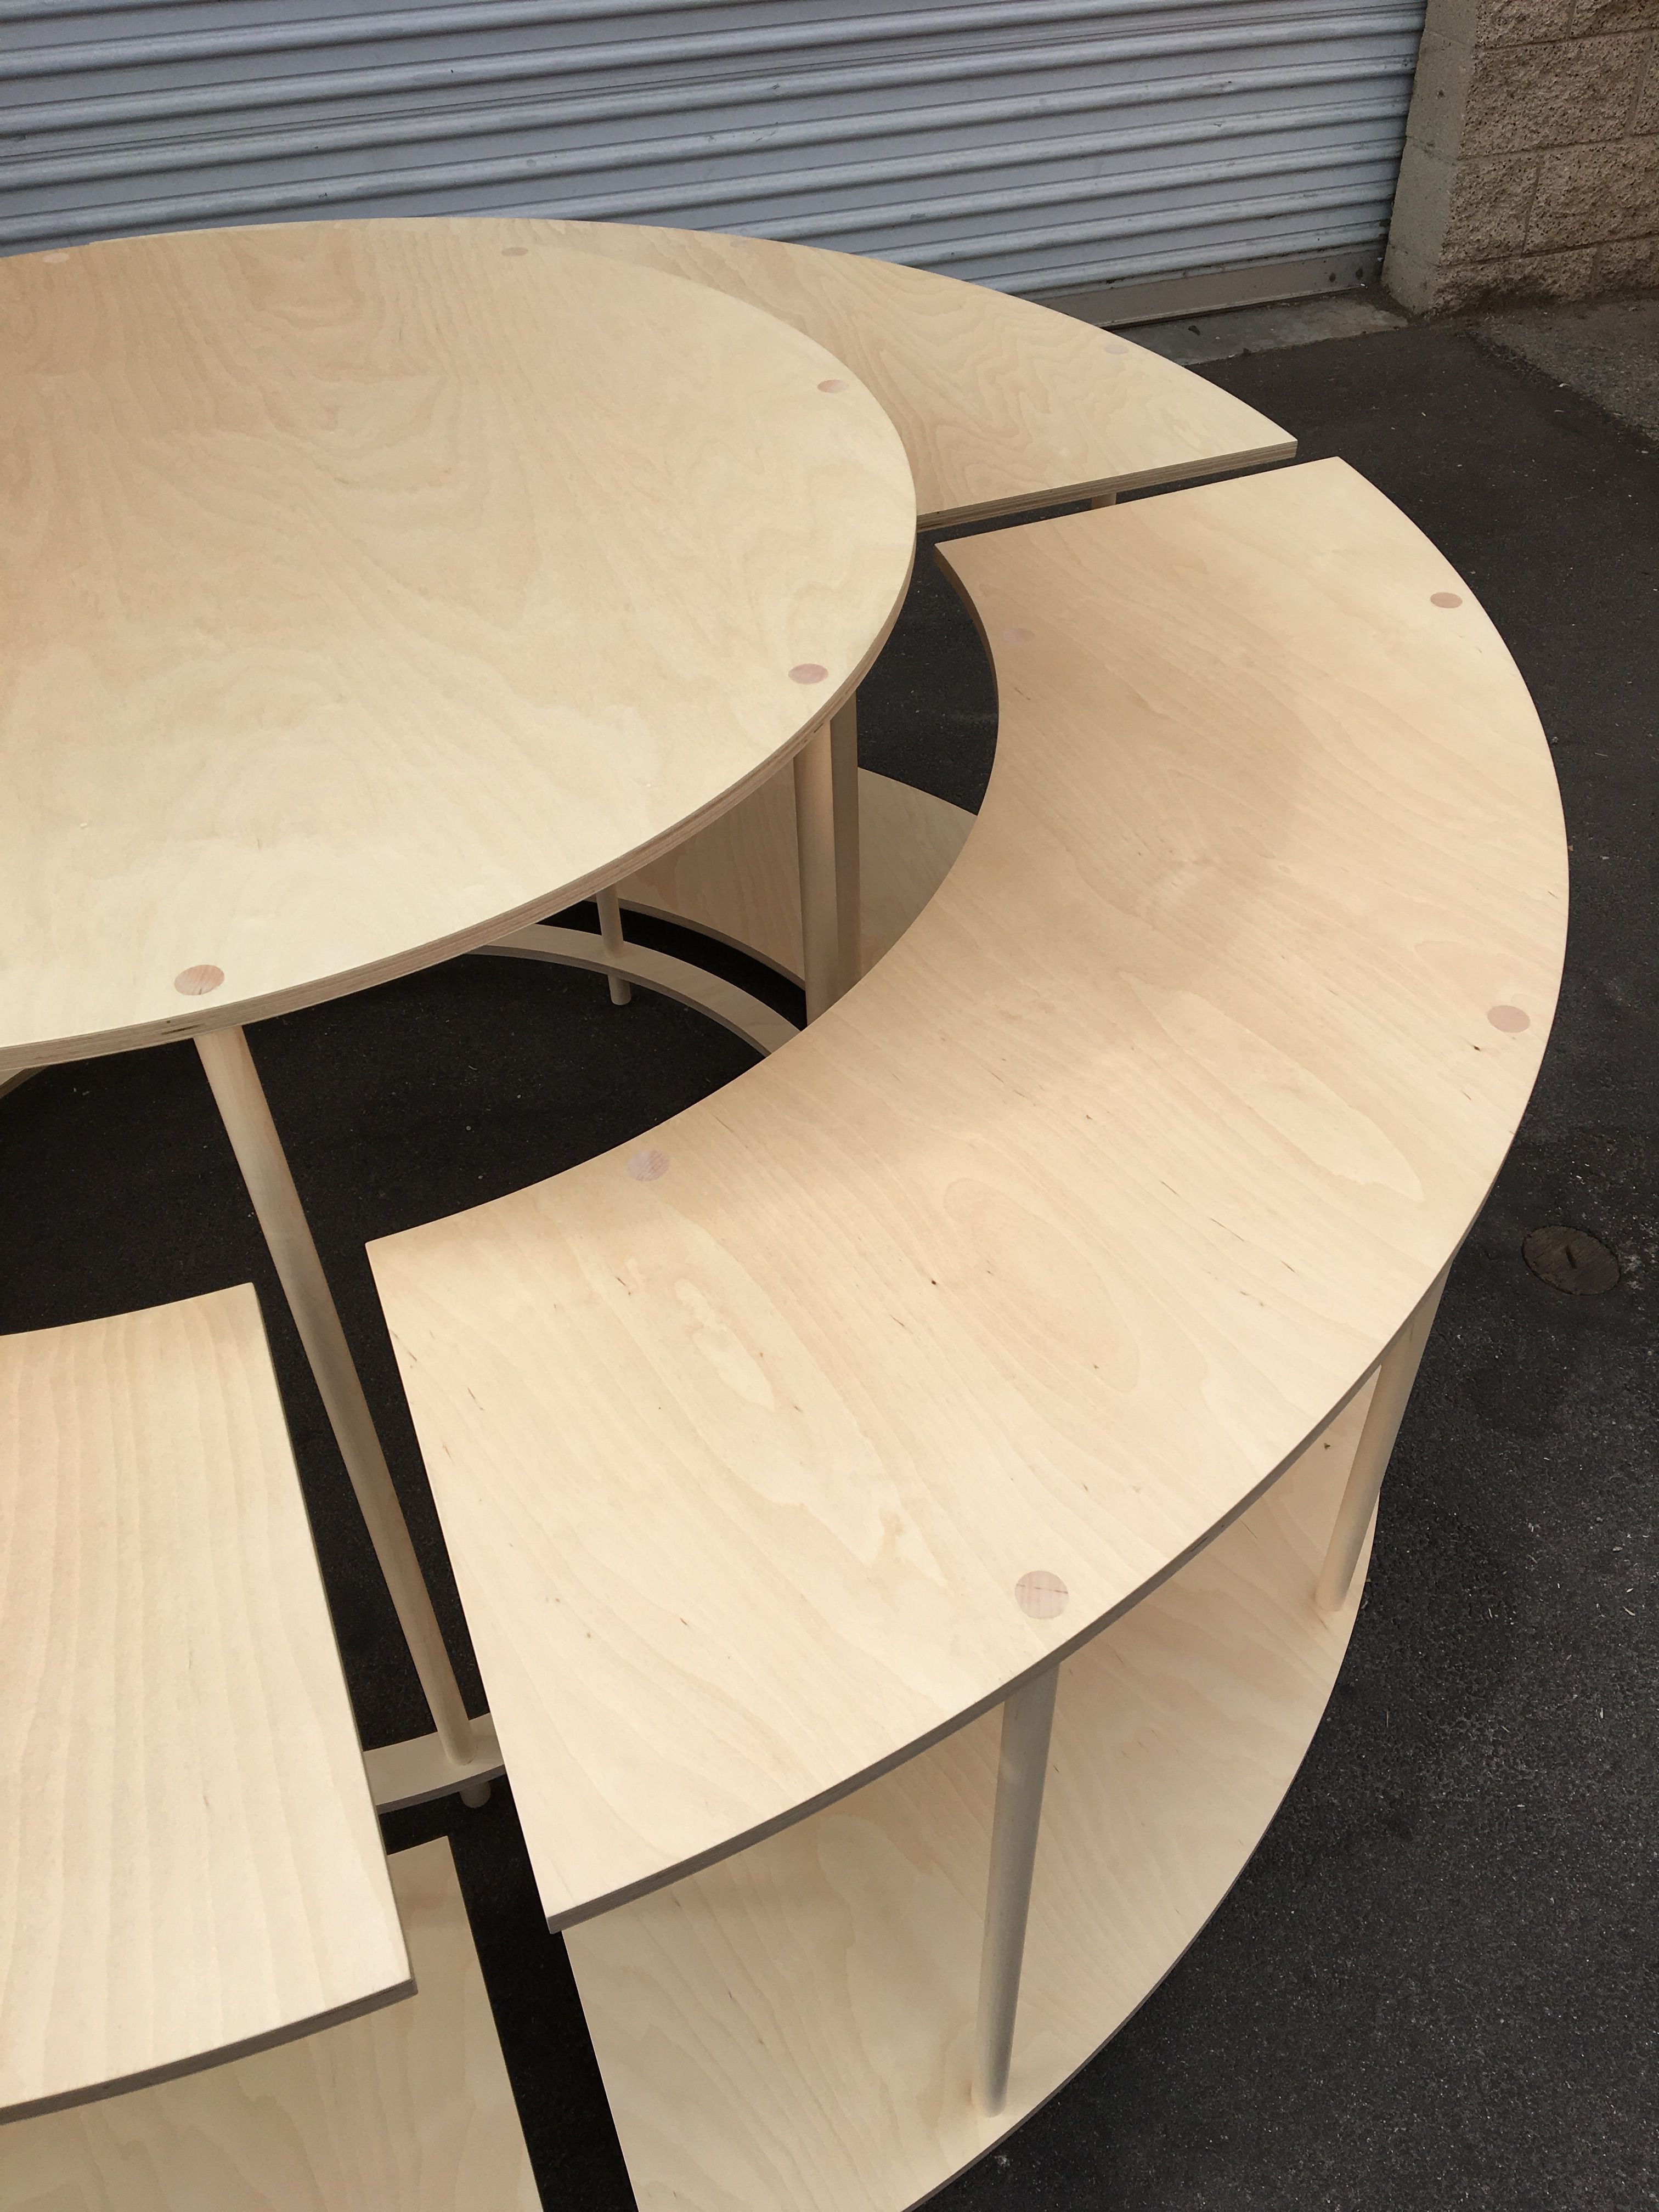  Display Table - Owl Bureau x Adidas / Abbott Kinney Festival product image 5